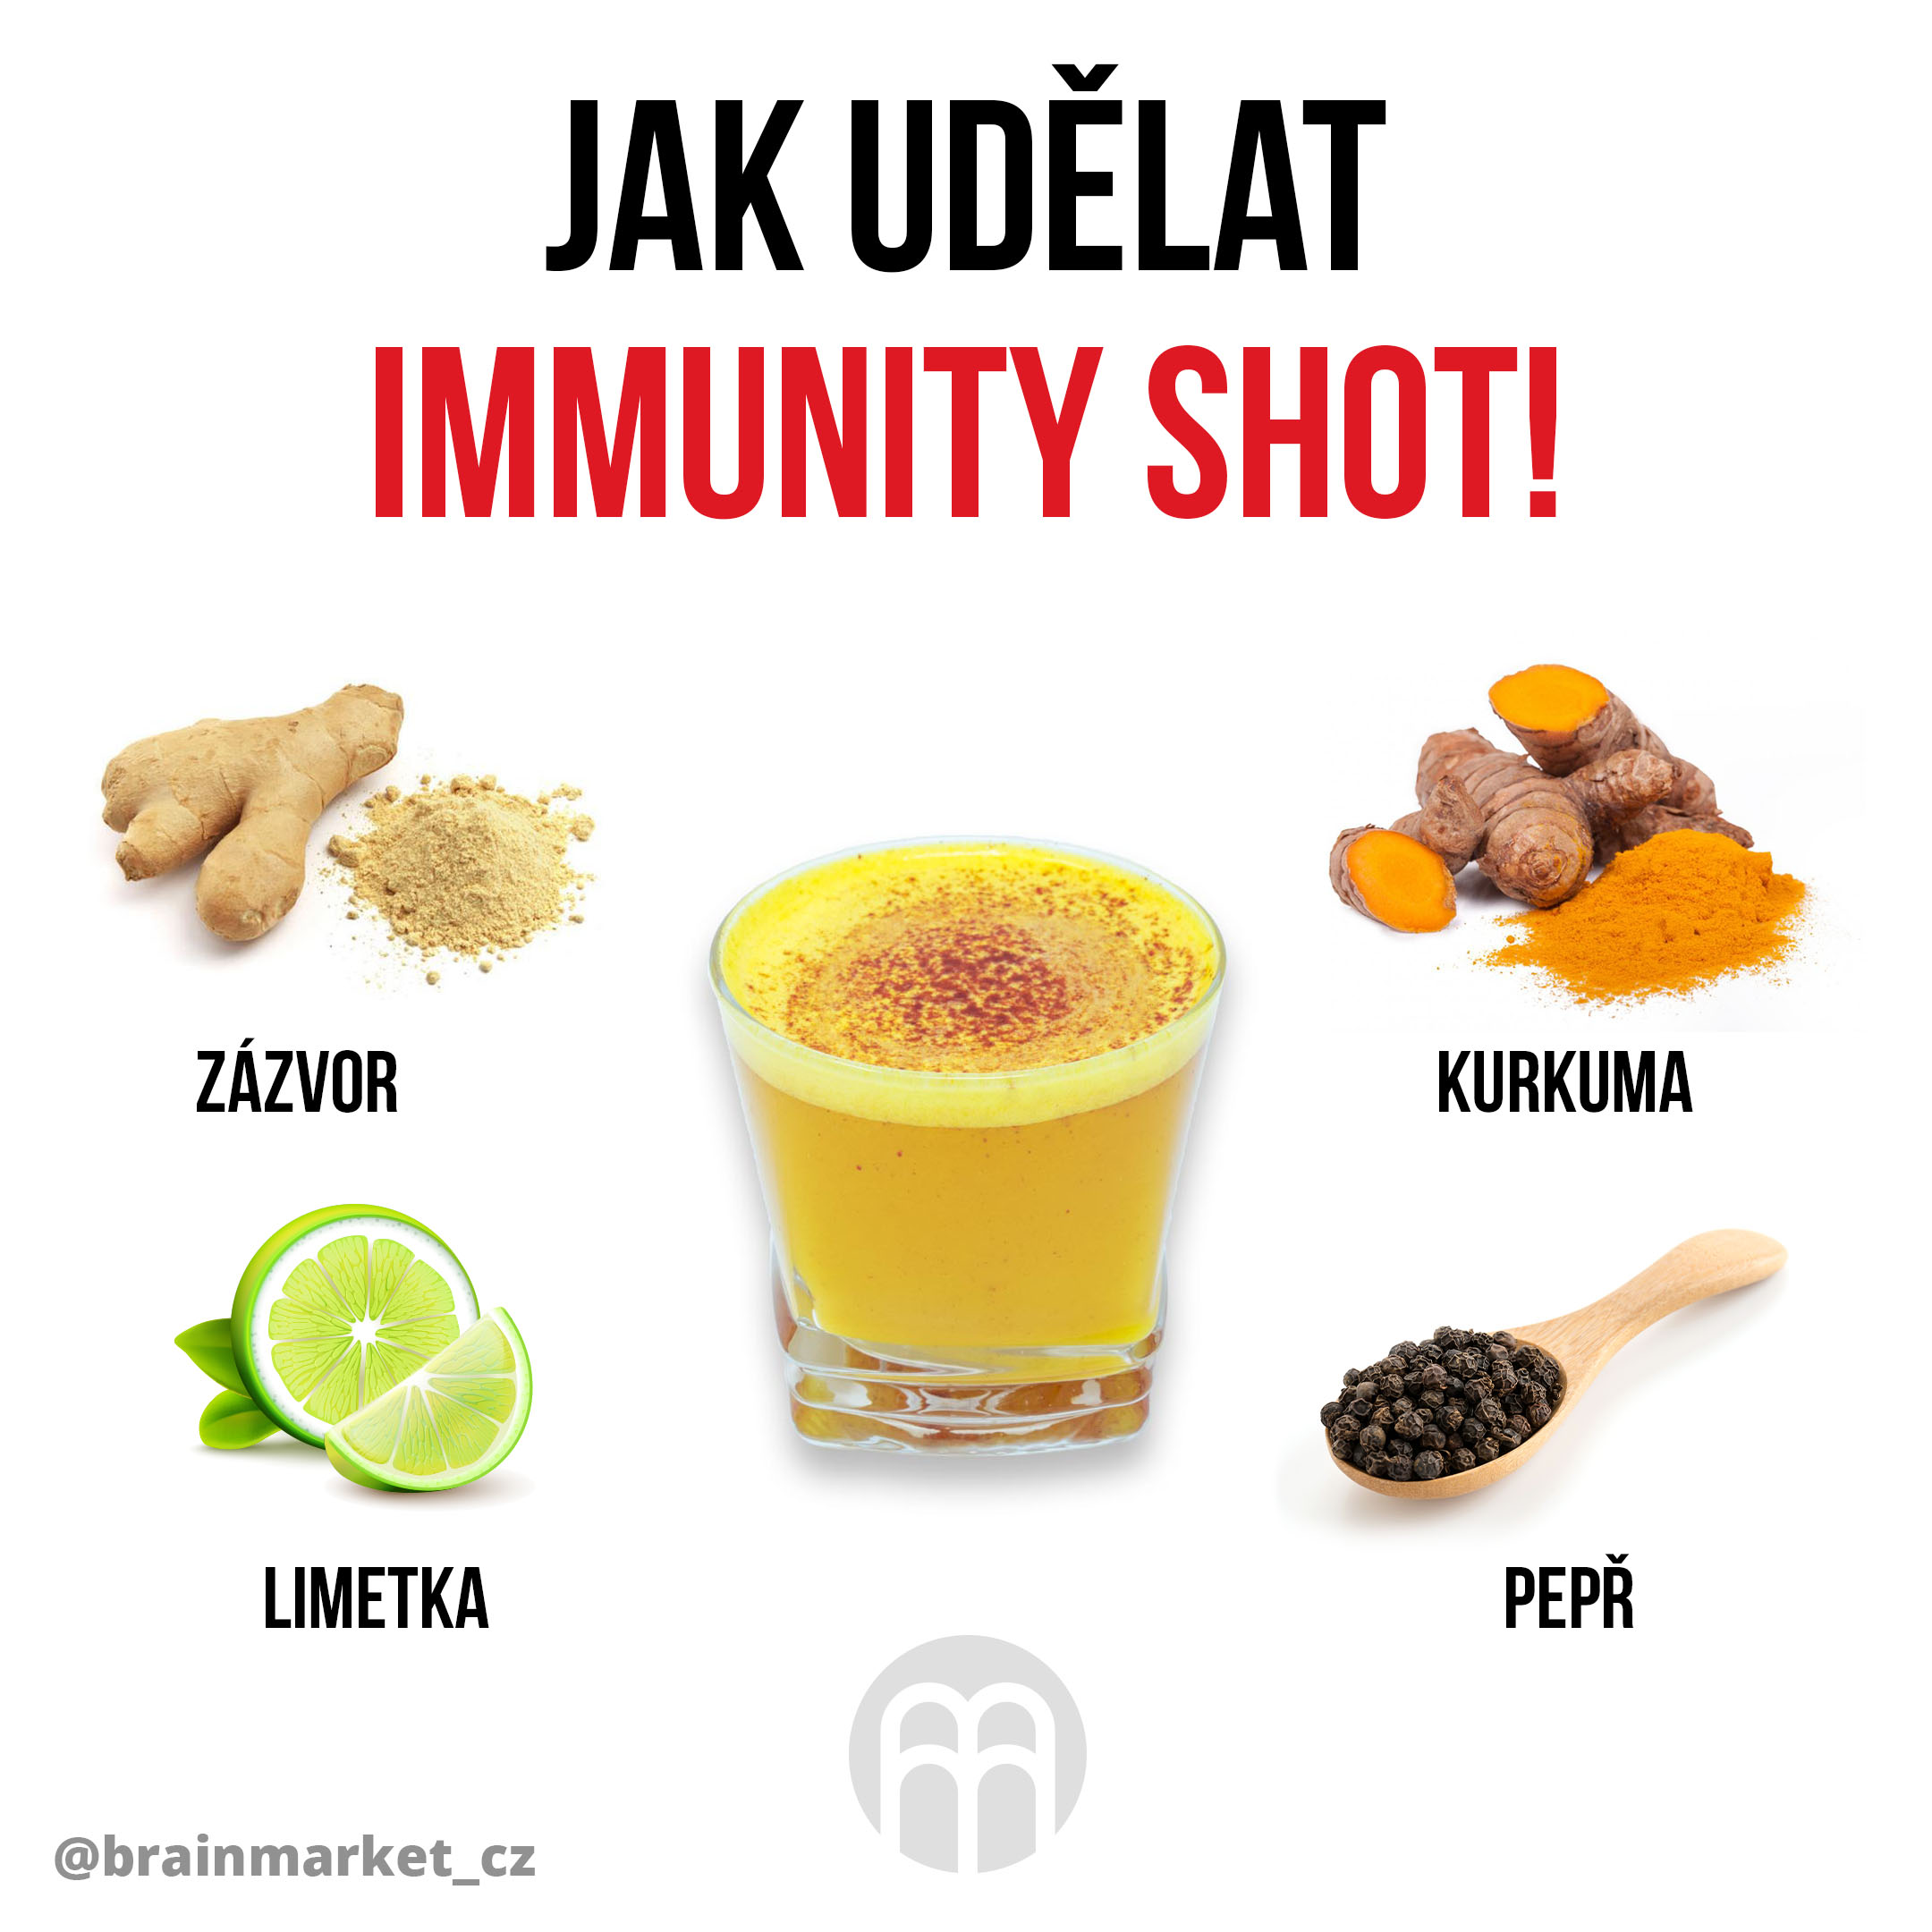 Jak připravit immunity shot